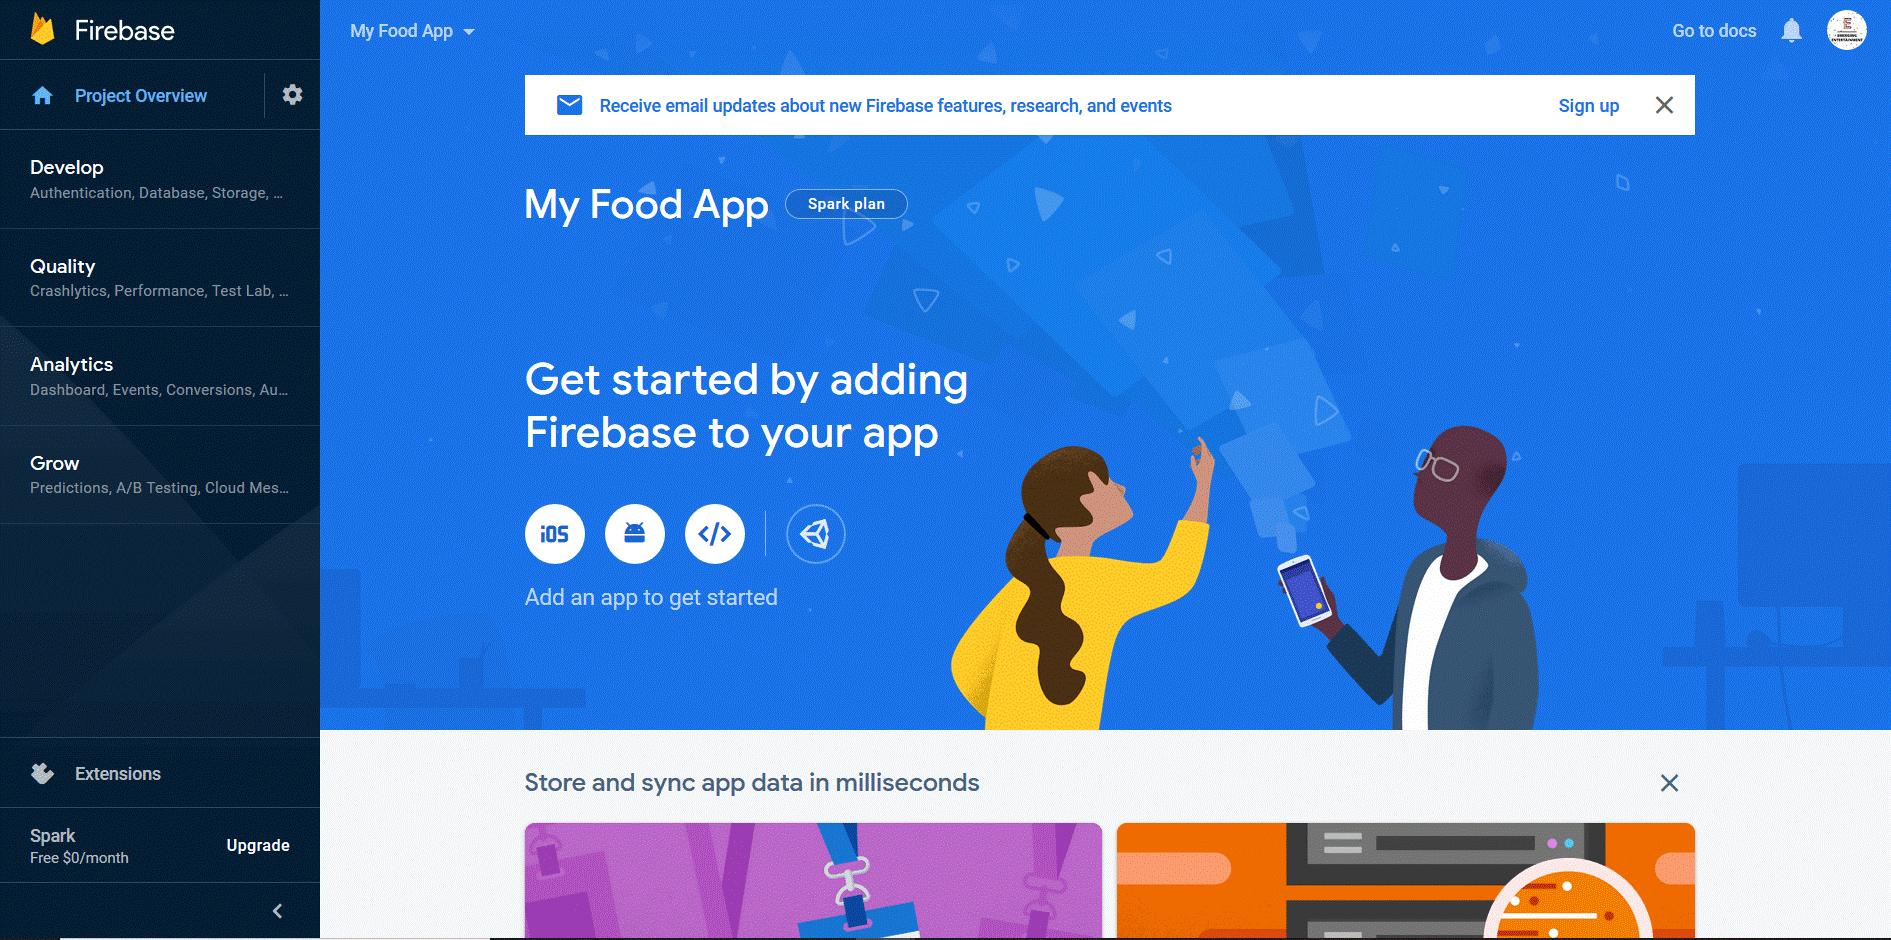 Adding Firebase to my food app